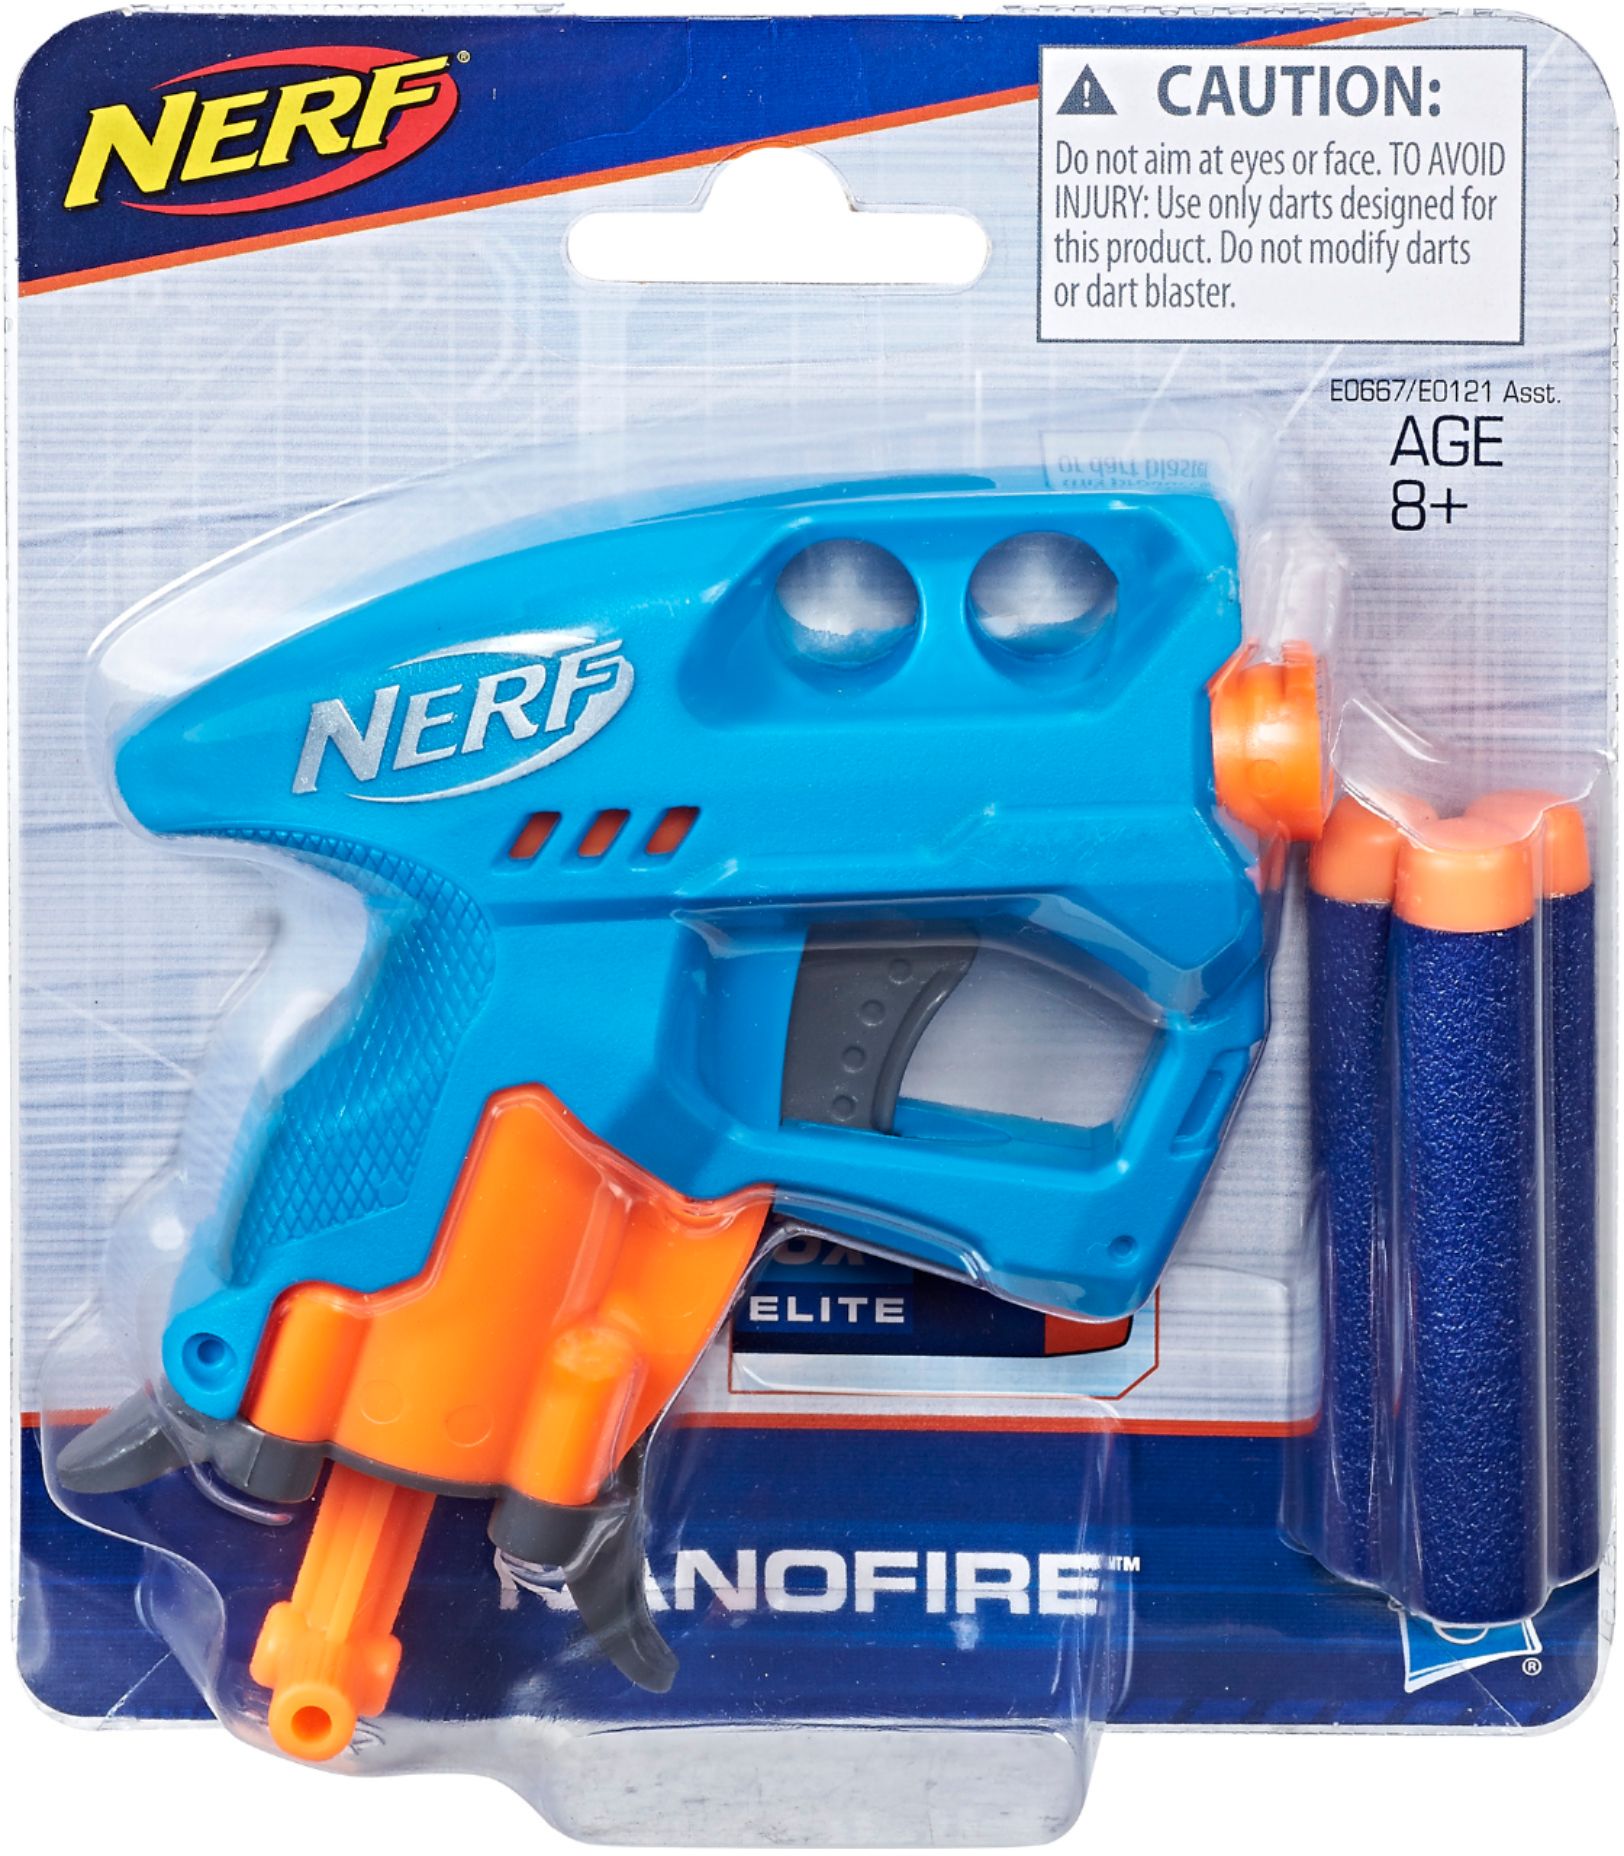 Blaster Mini Dart Pistol Gun Orange Teal Small Mini Micro Hasbro NERF NANOFIRE 